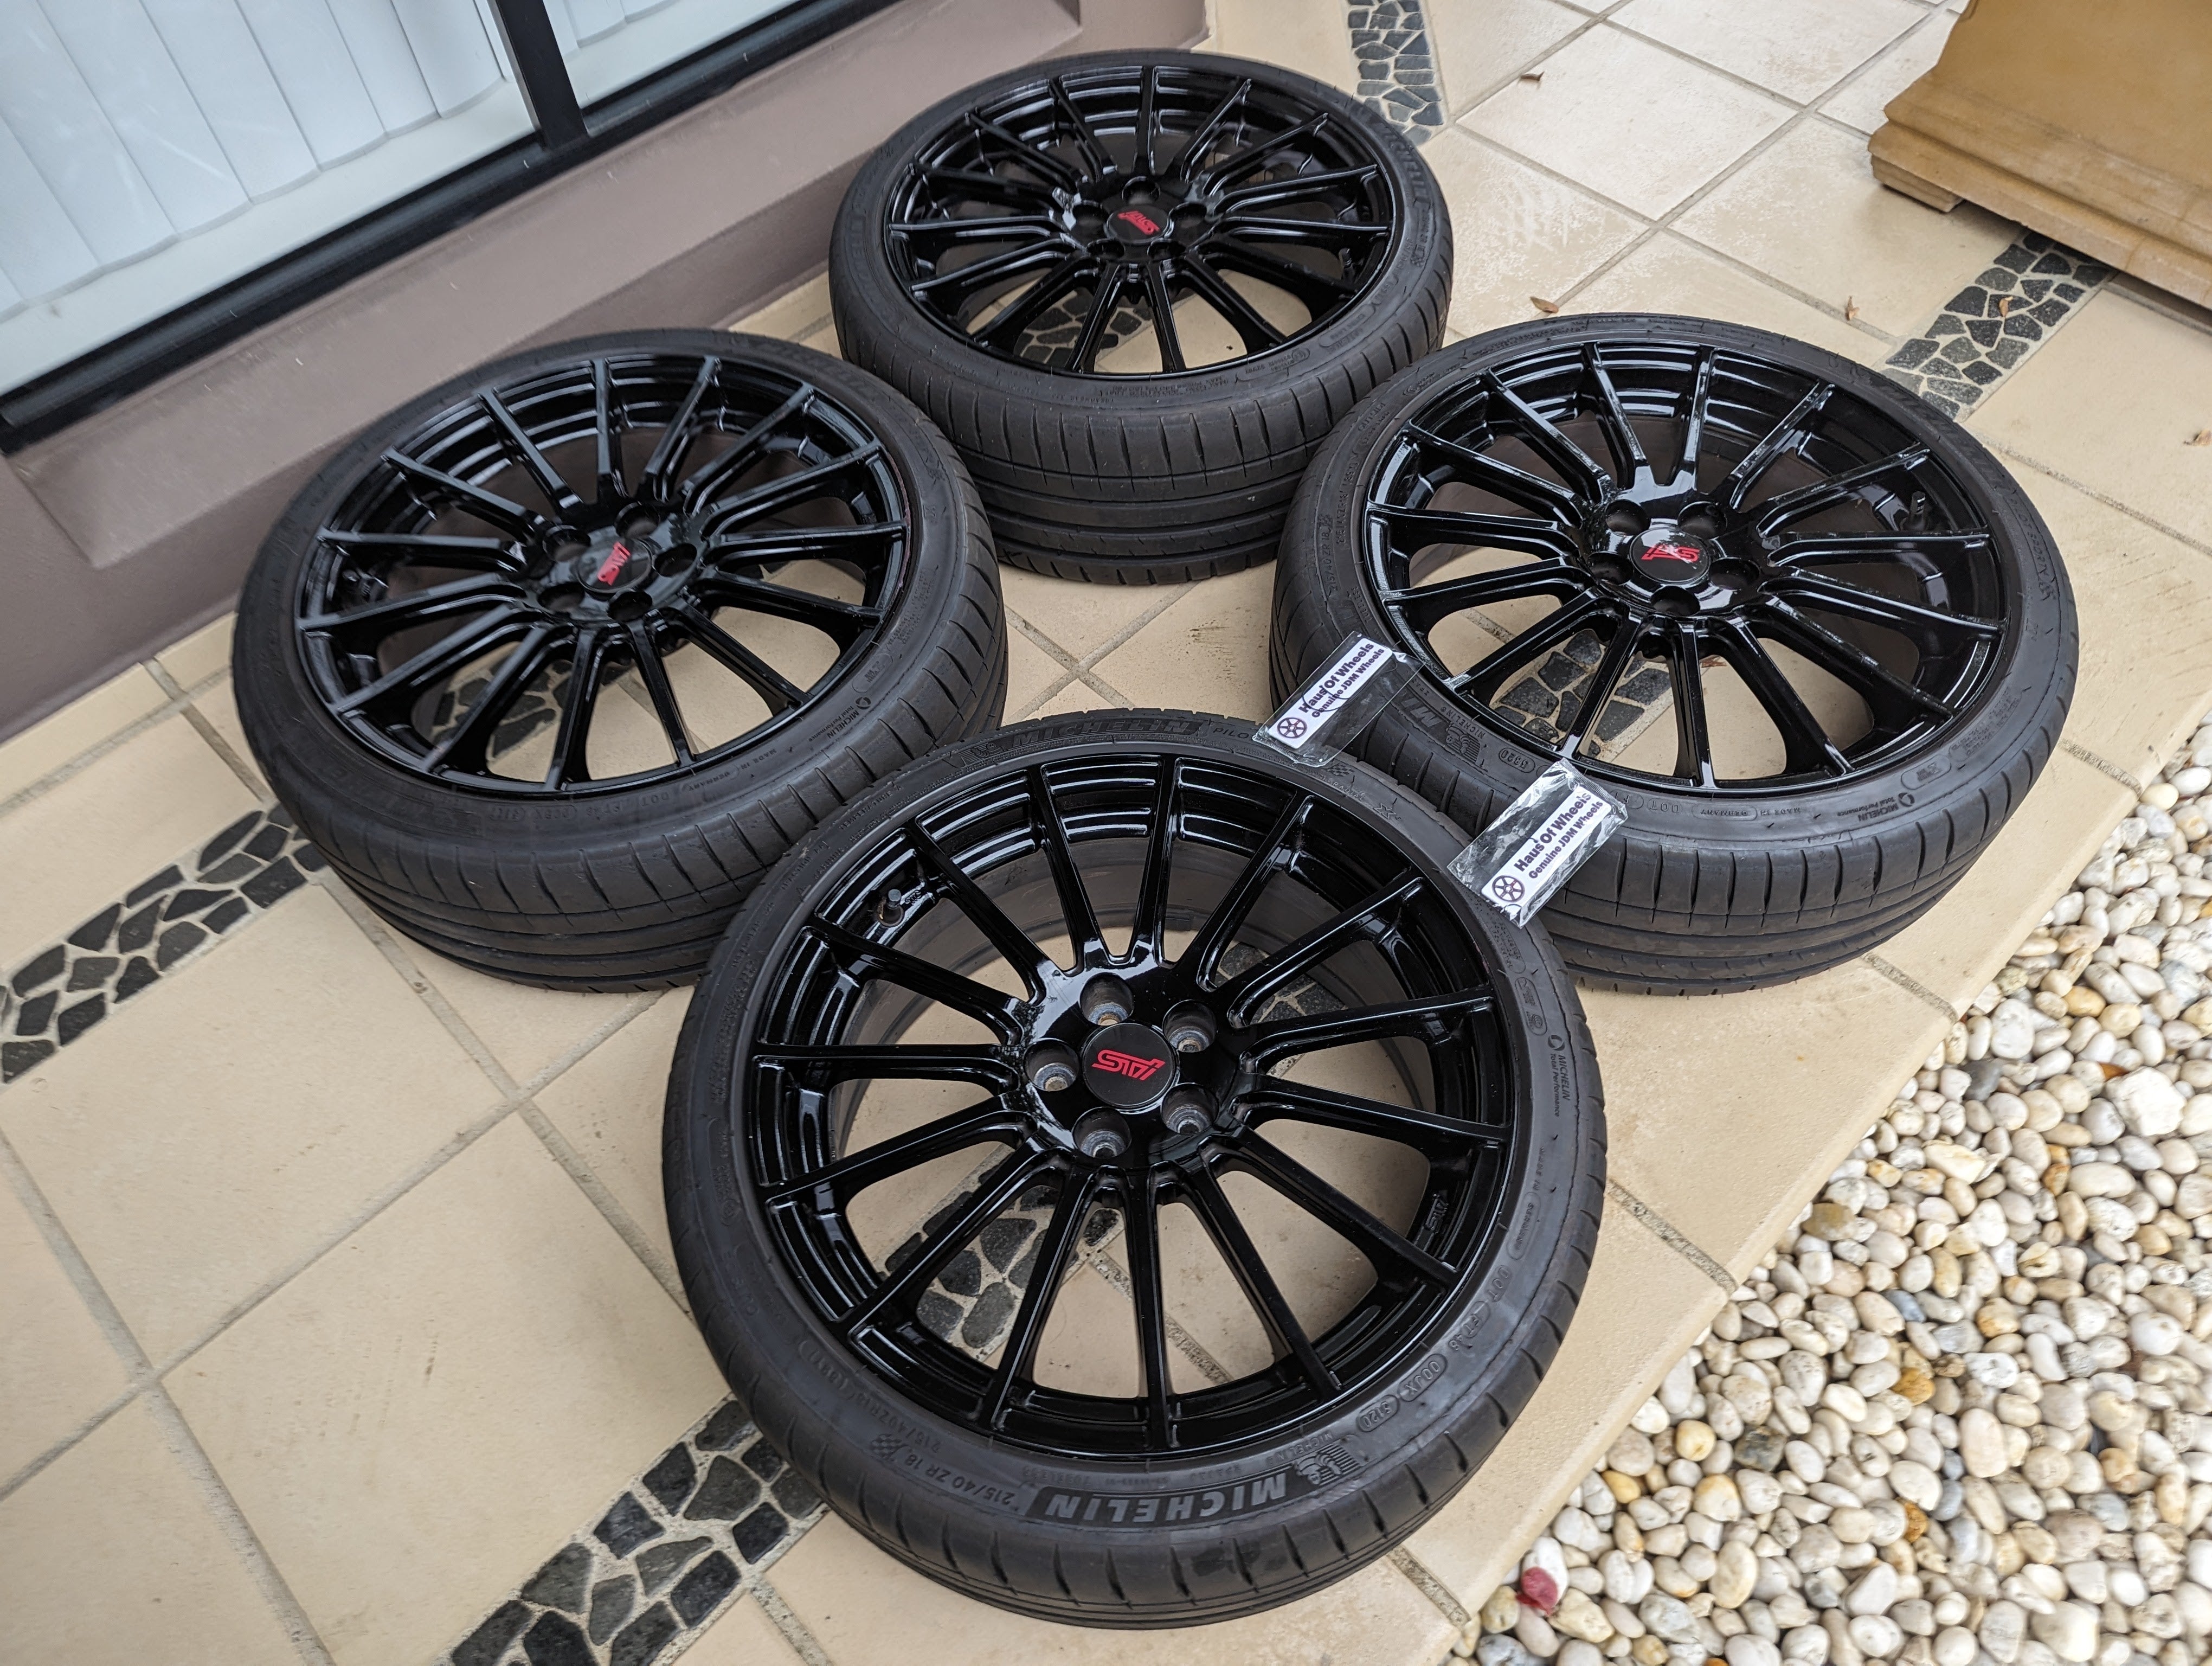 Enkei x STI Special Edition Wheels with Genuine STI Center Caps and Near New Michelin Pilot Sports 4 Tyres